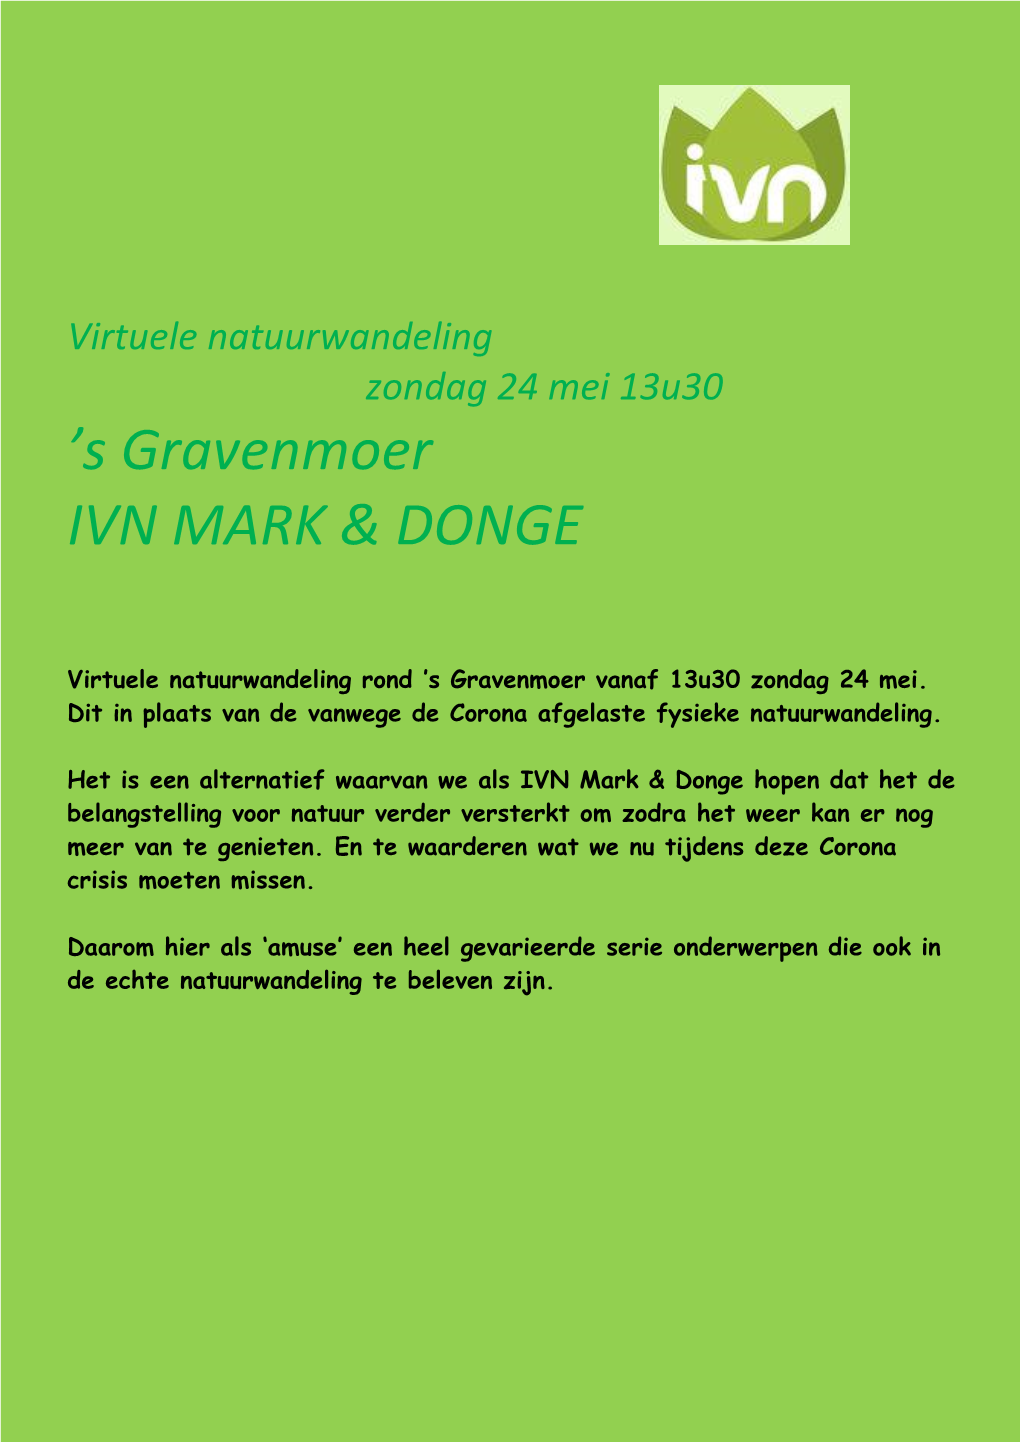 'S Gravenmoer IVN MARK & DONGE